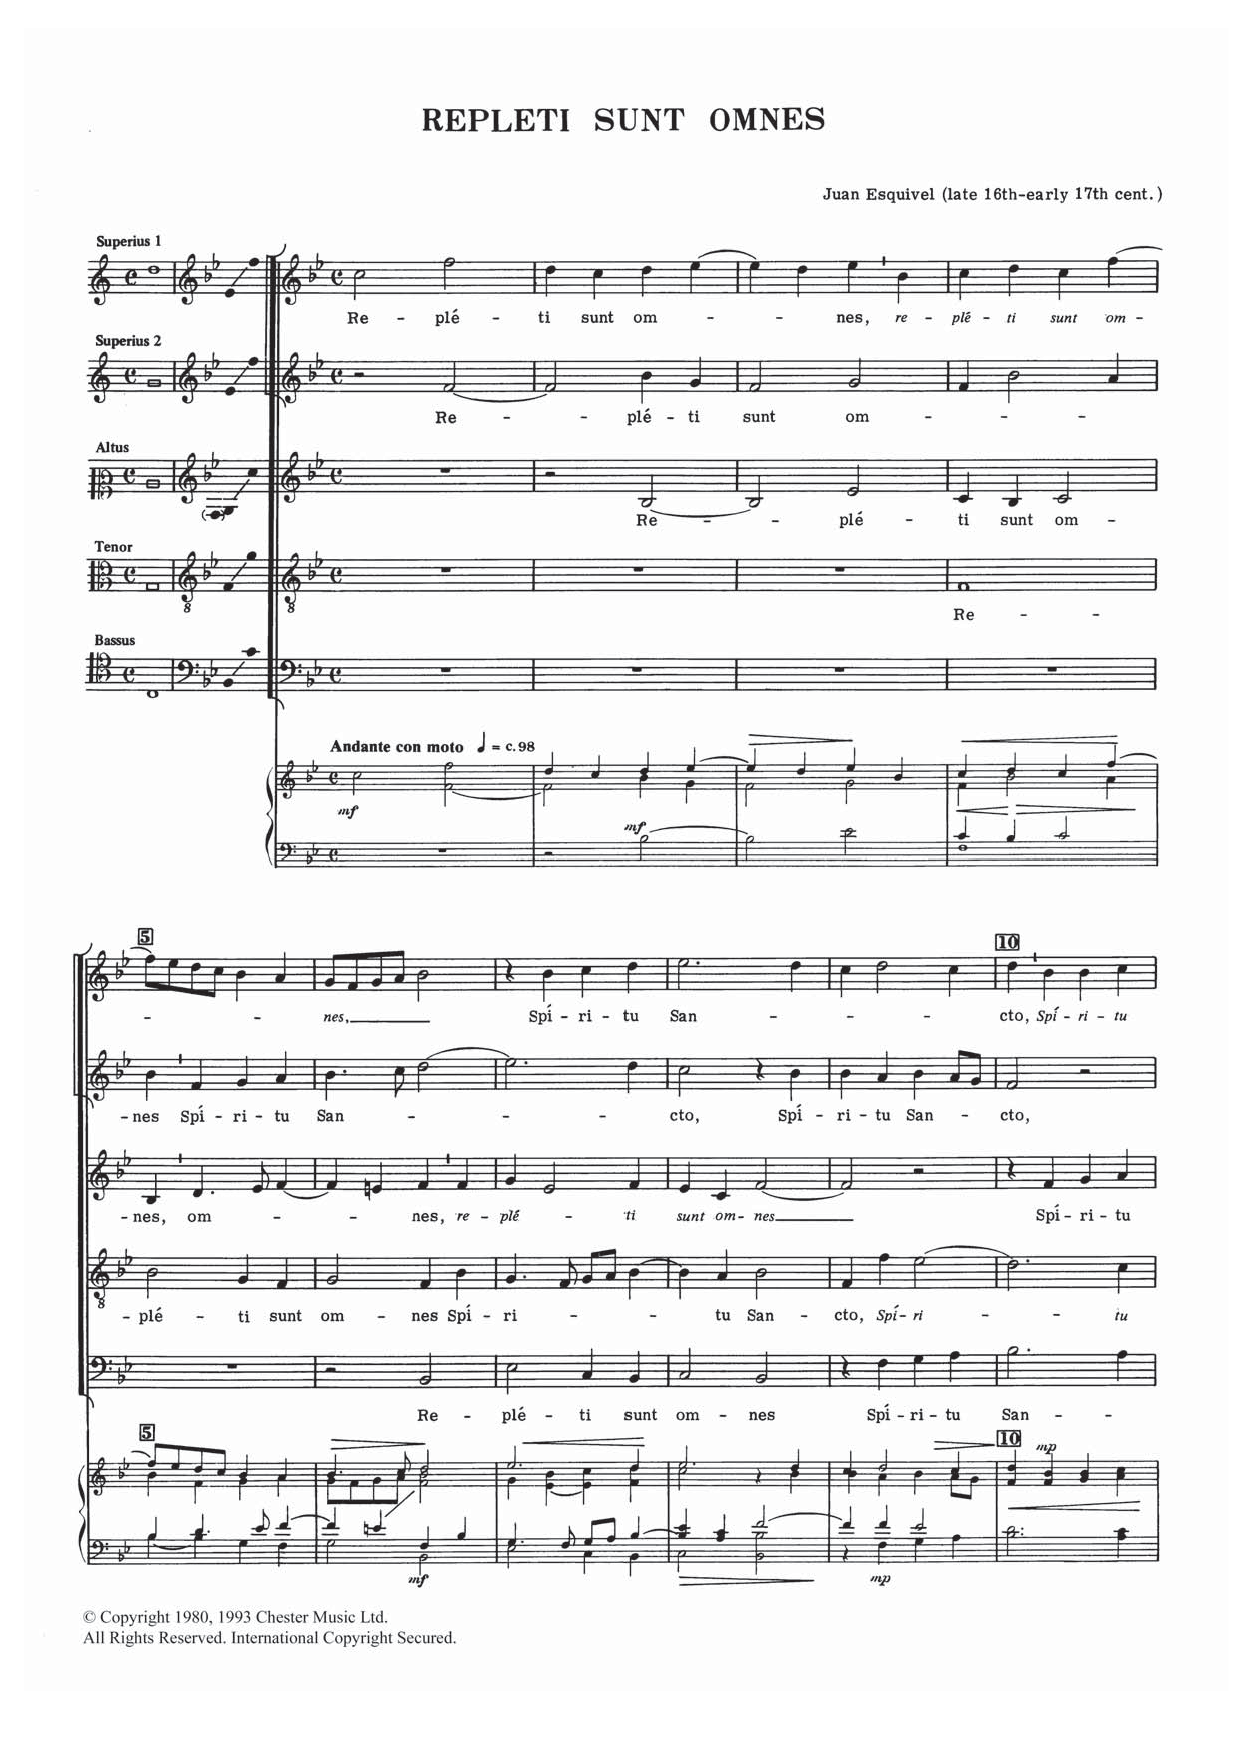 Juan Esquivel Repleti Sunt Omnes Sheet Music Notes & Chords for Choral SSATB - Download or Print PDF